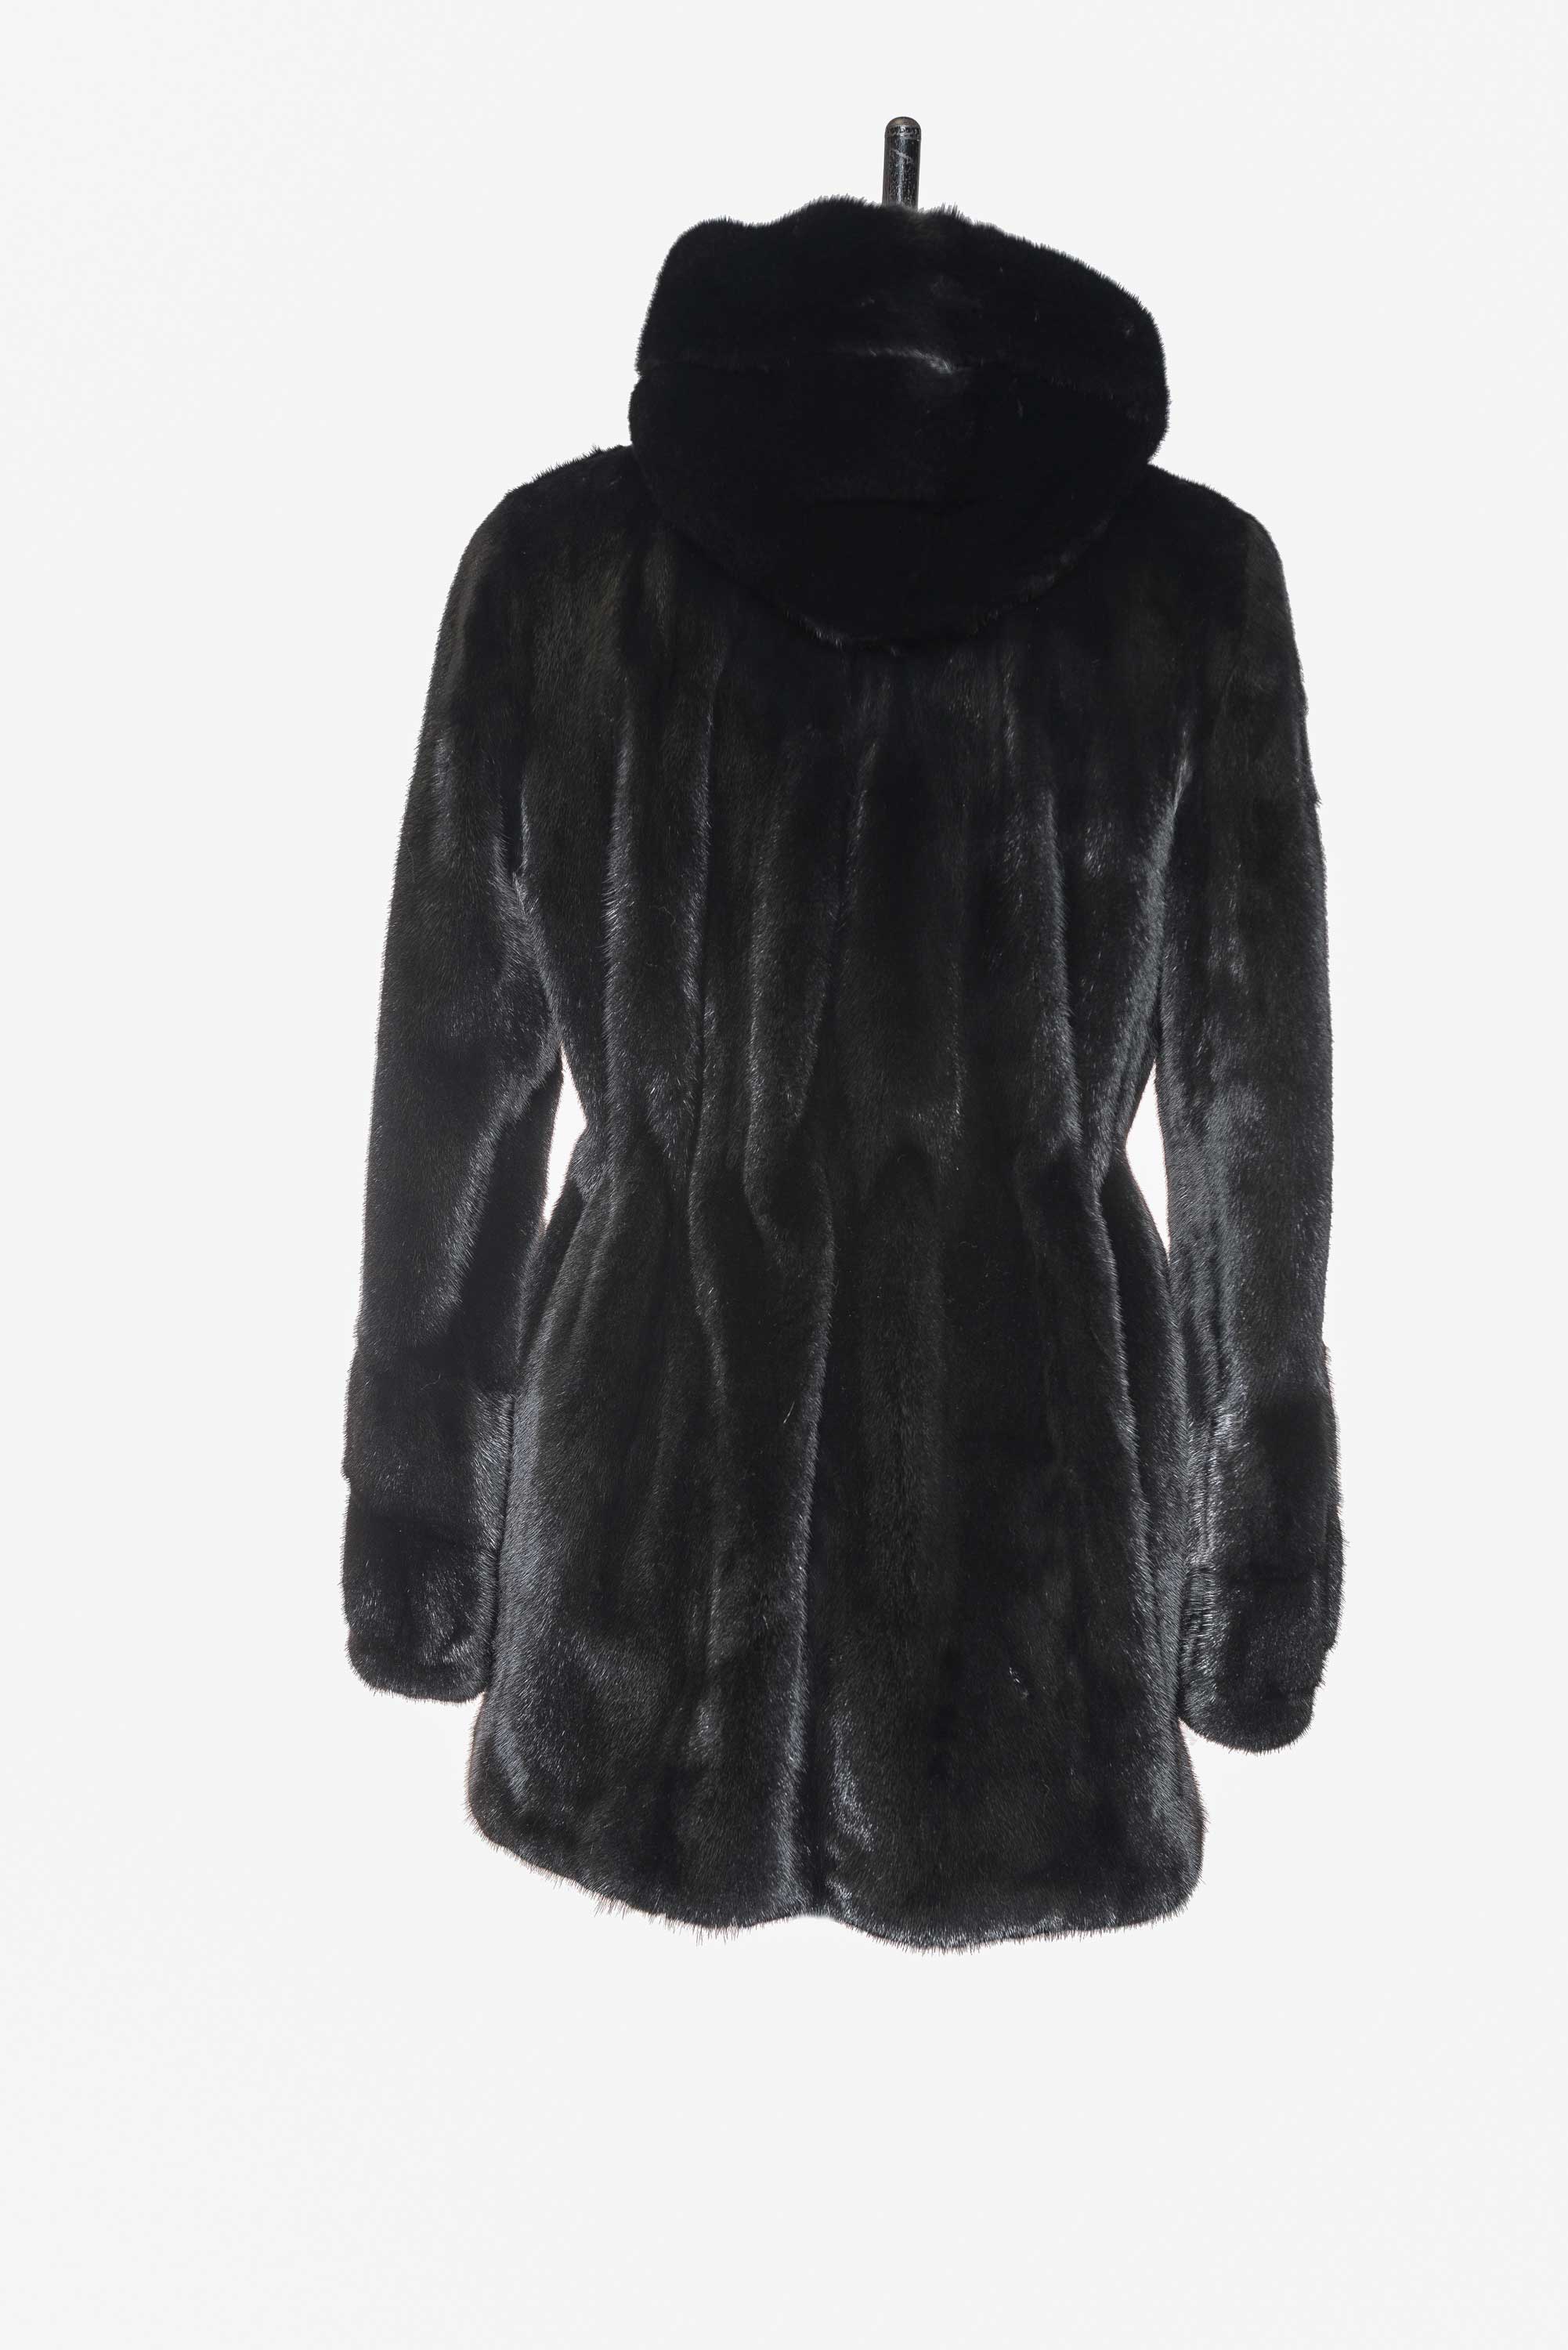 Black Mink Coat with Hood - Thalia Furs